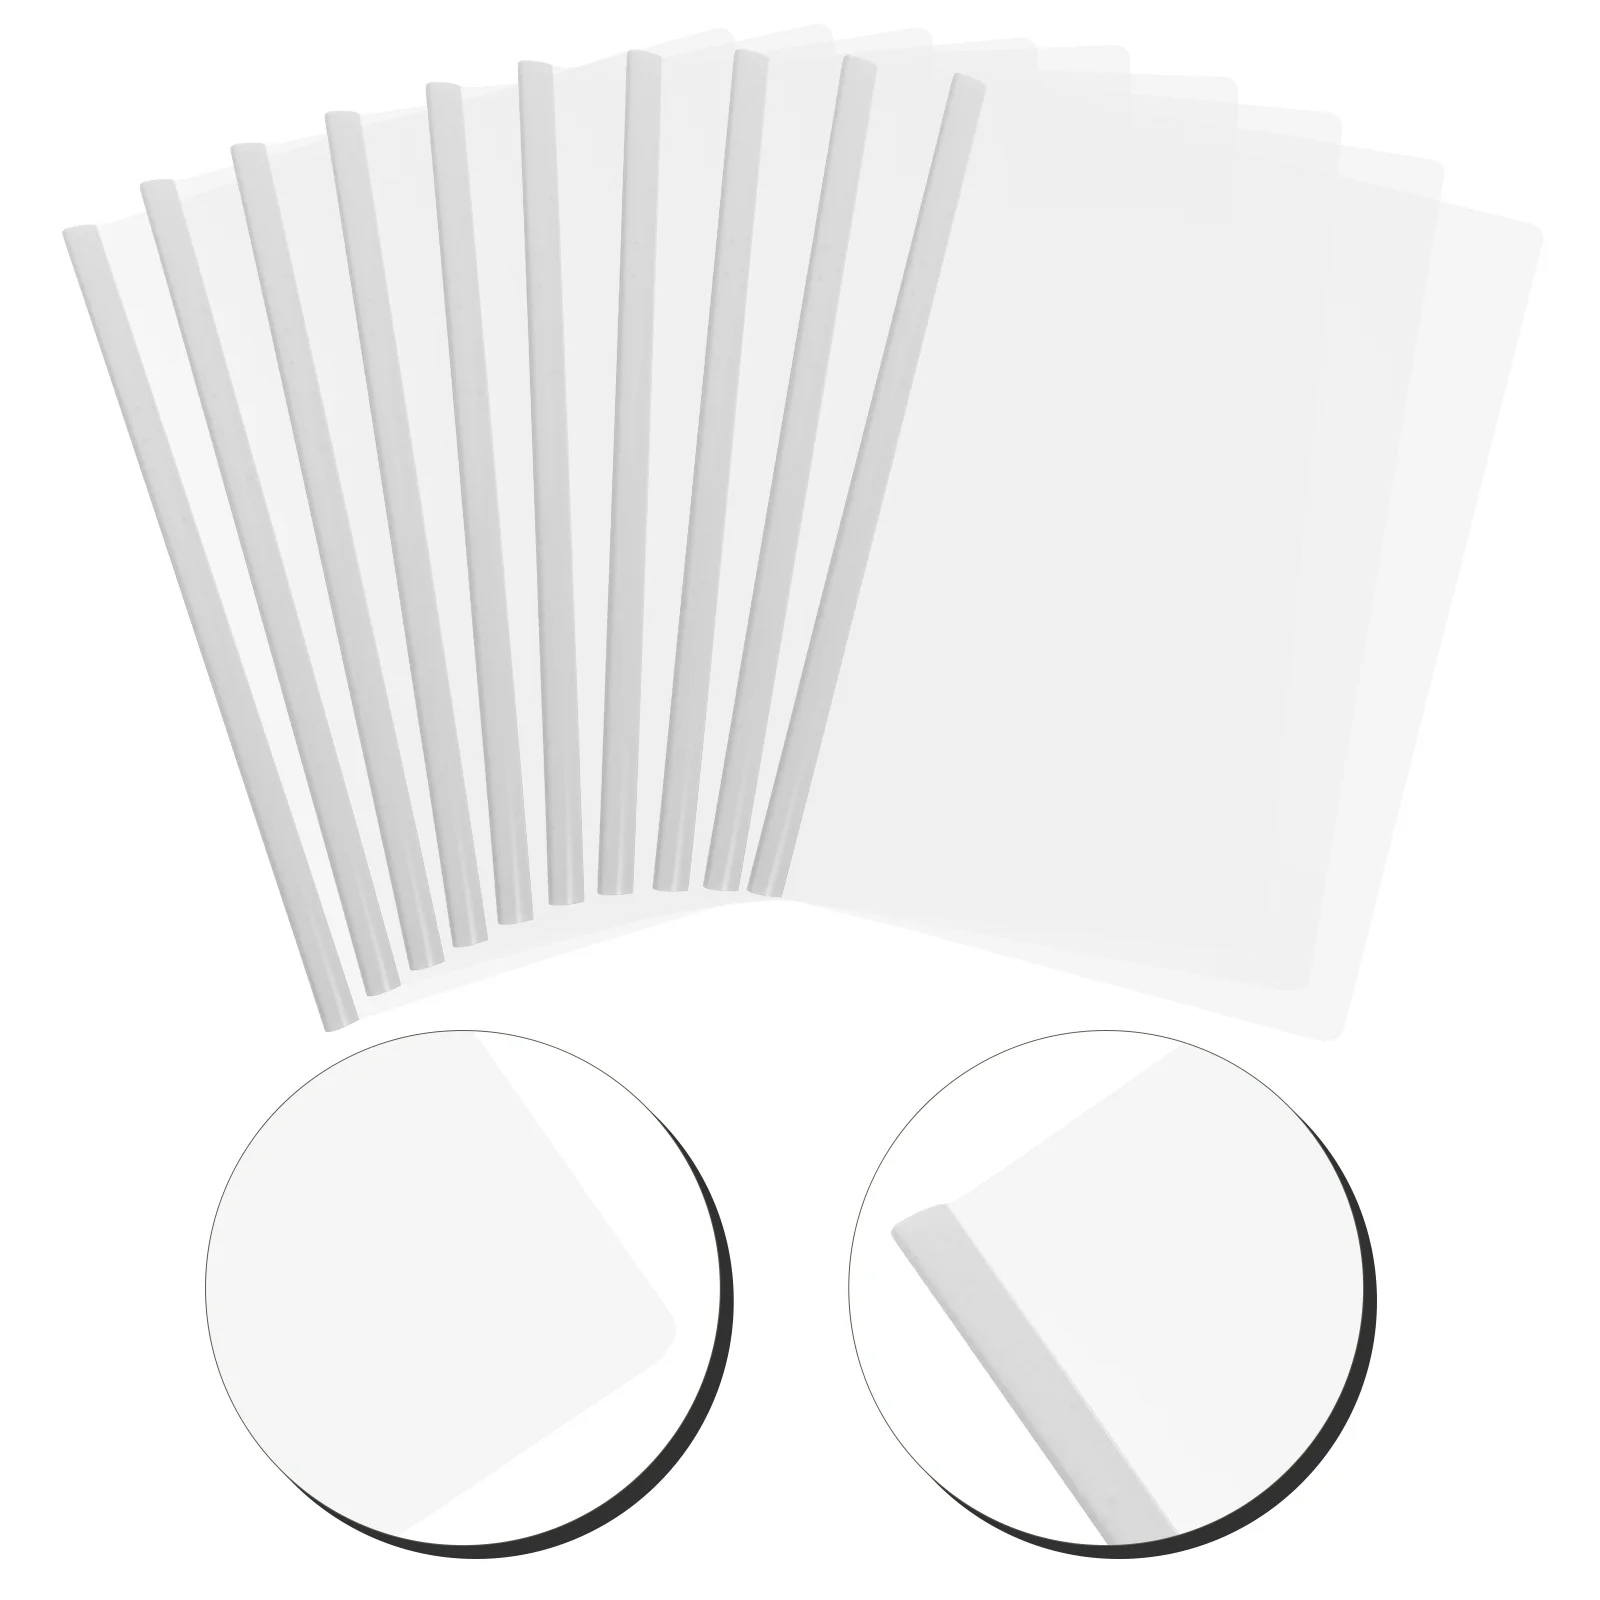 

10 Pcs Transparent Drawbar Book Cover Folder Binder Paper Report Covers with Sliding Portfolio File Fixing Clip Plastic Flip